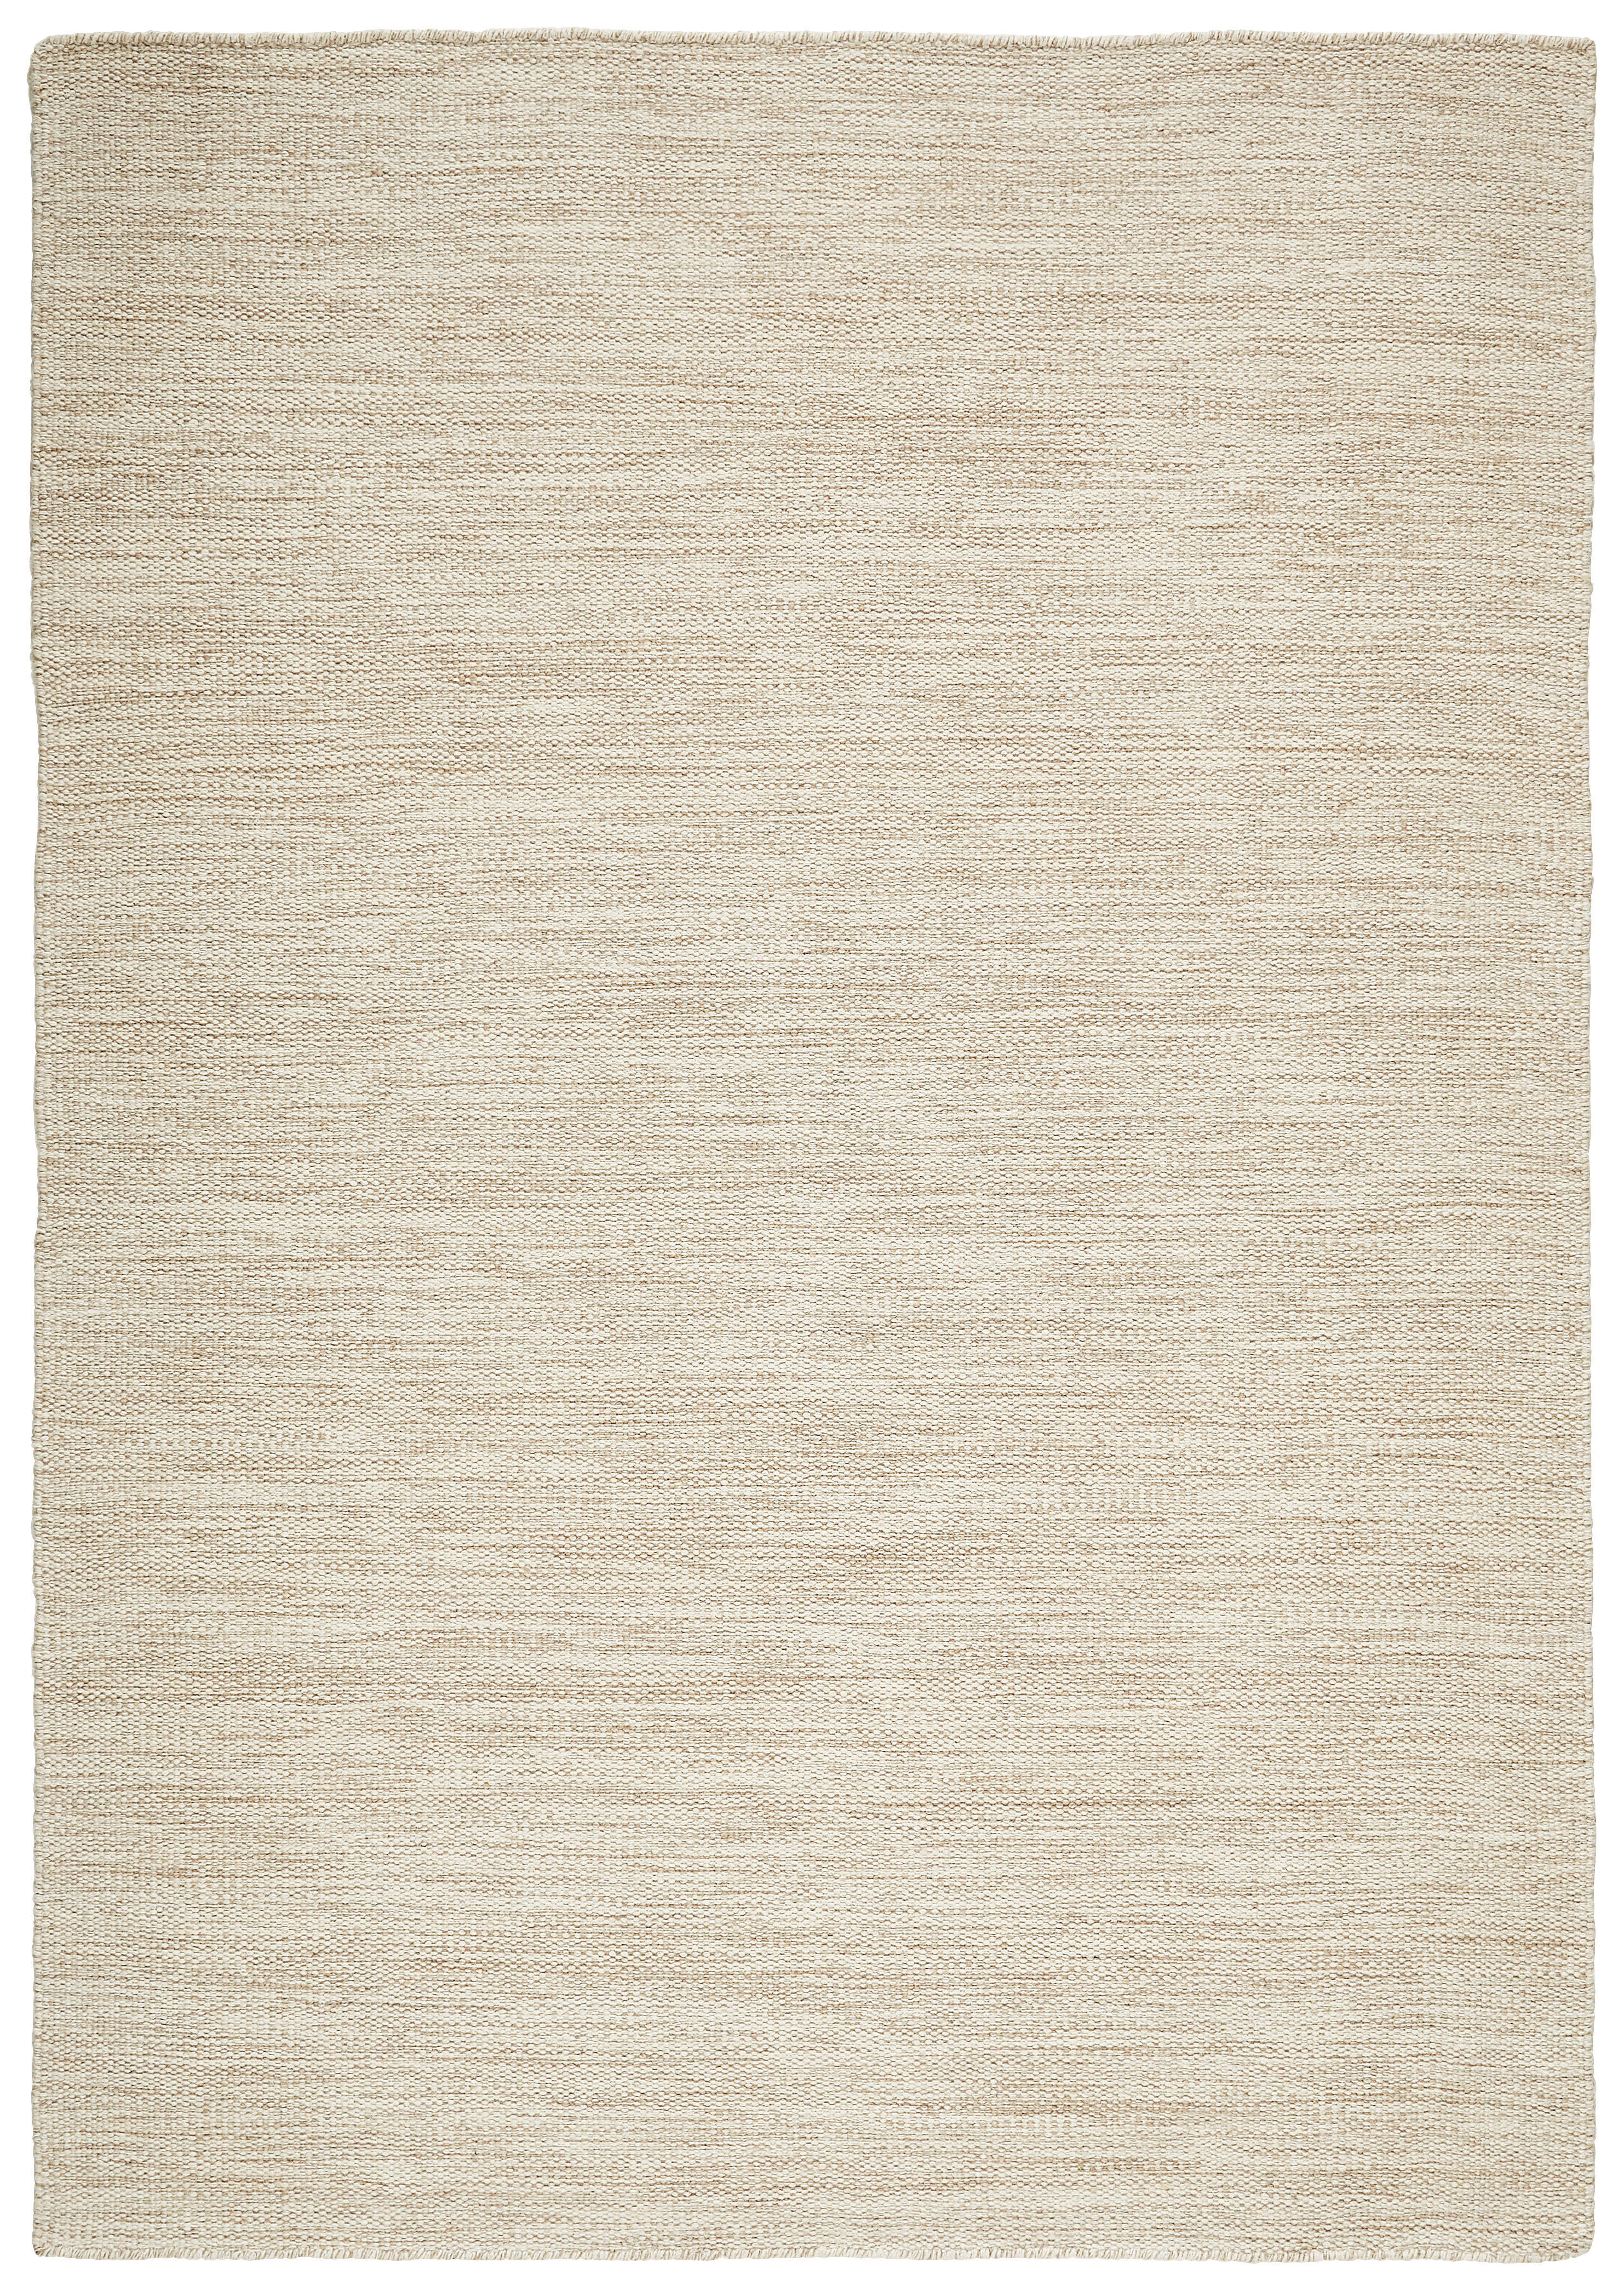 Wollteppich  70/130 cm  Beige   - Beige, Natur, Textil (70/130cm) - Linea Natura